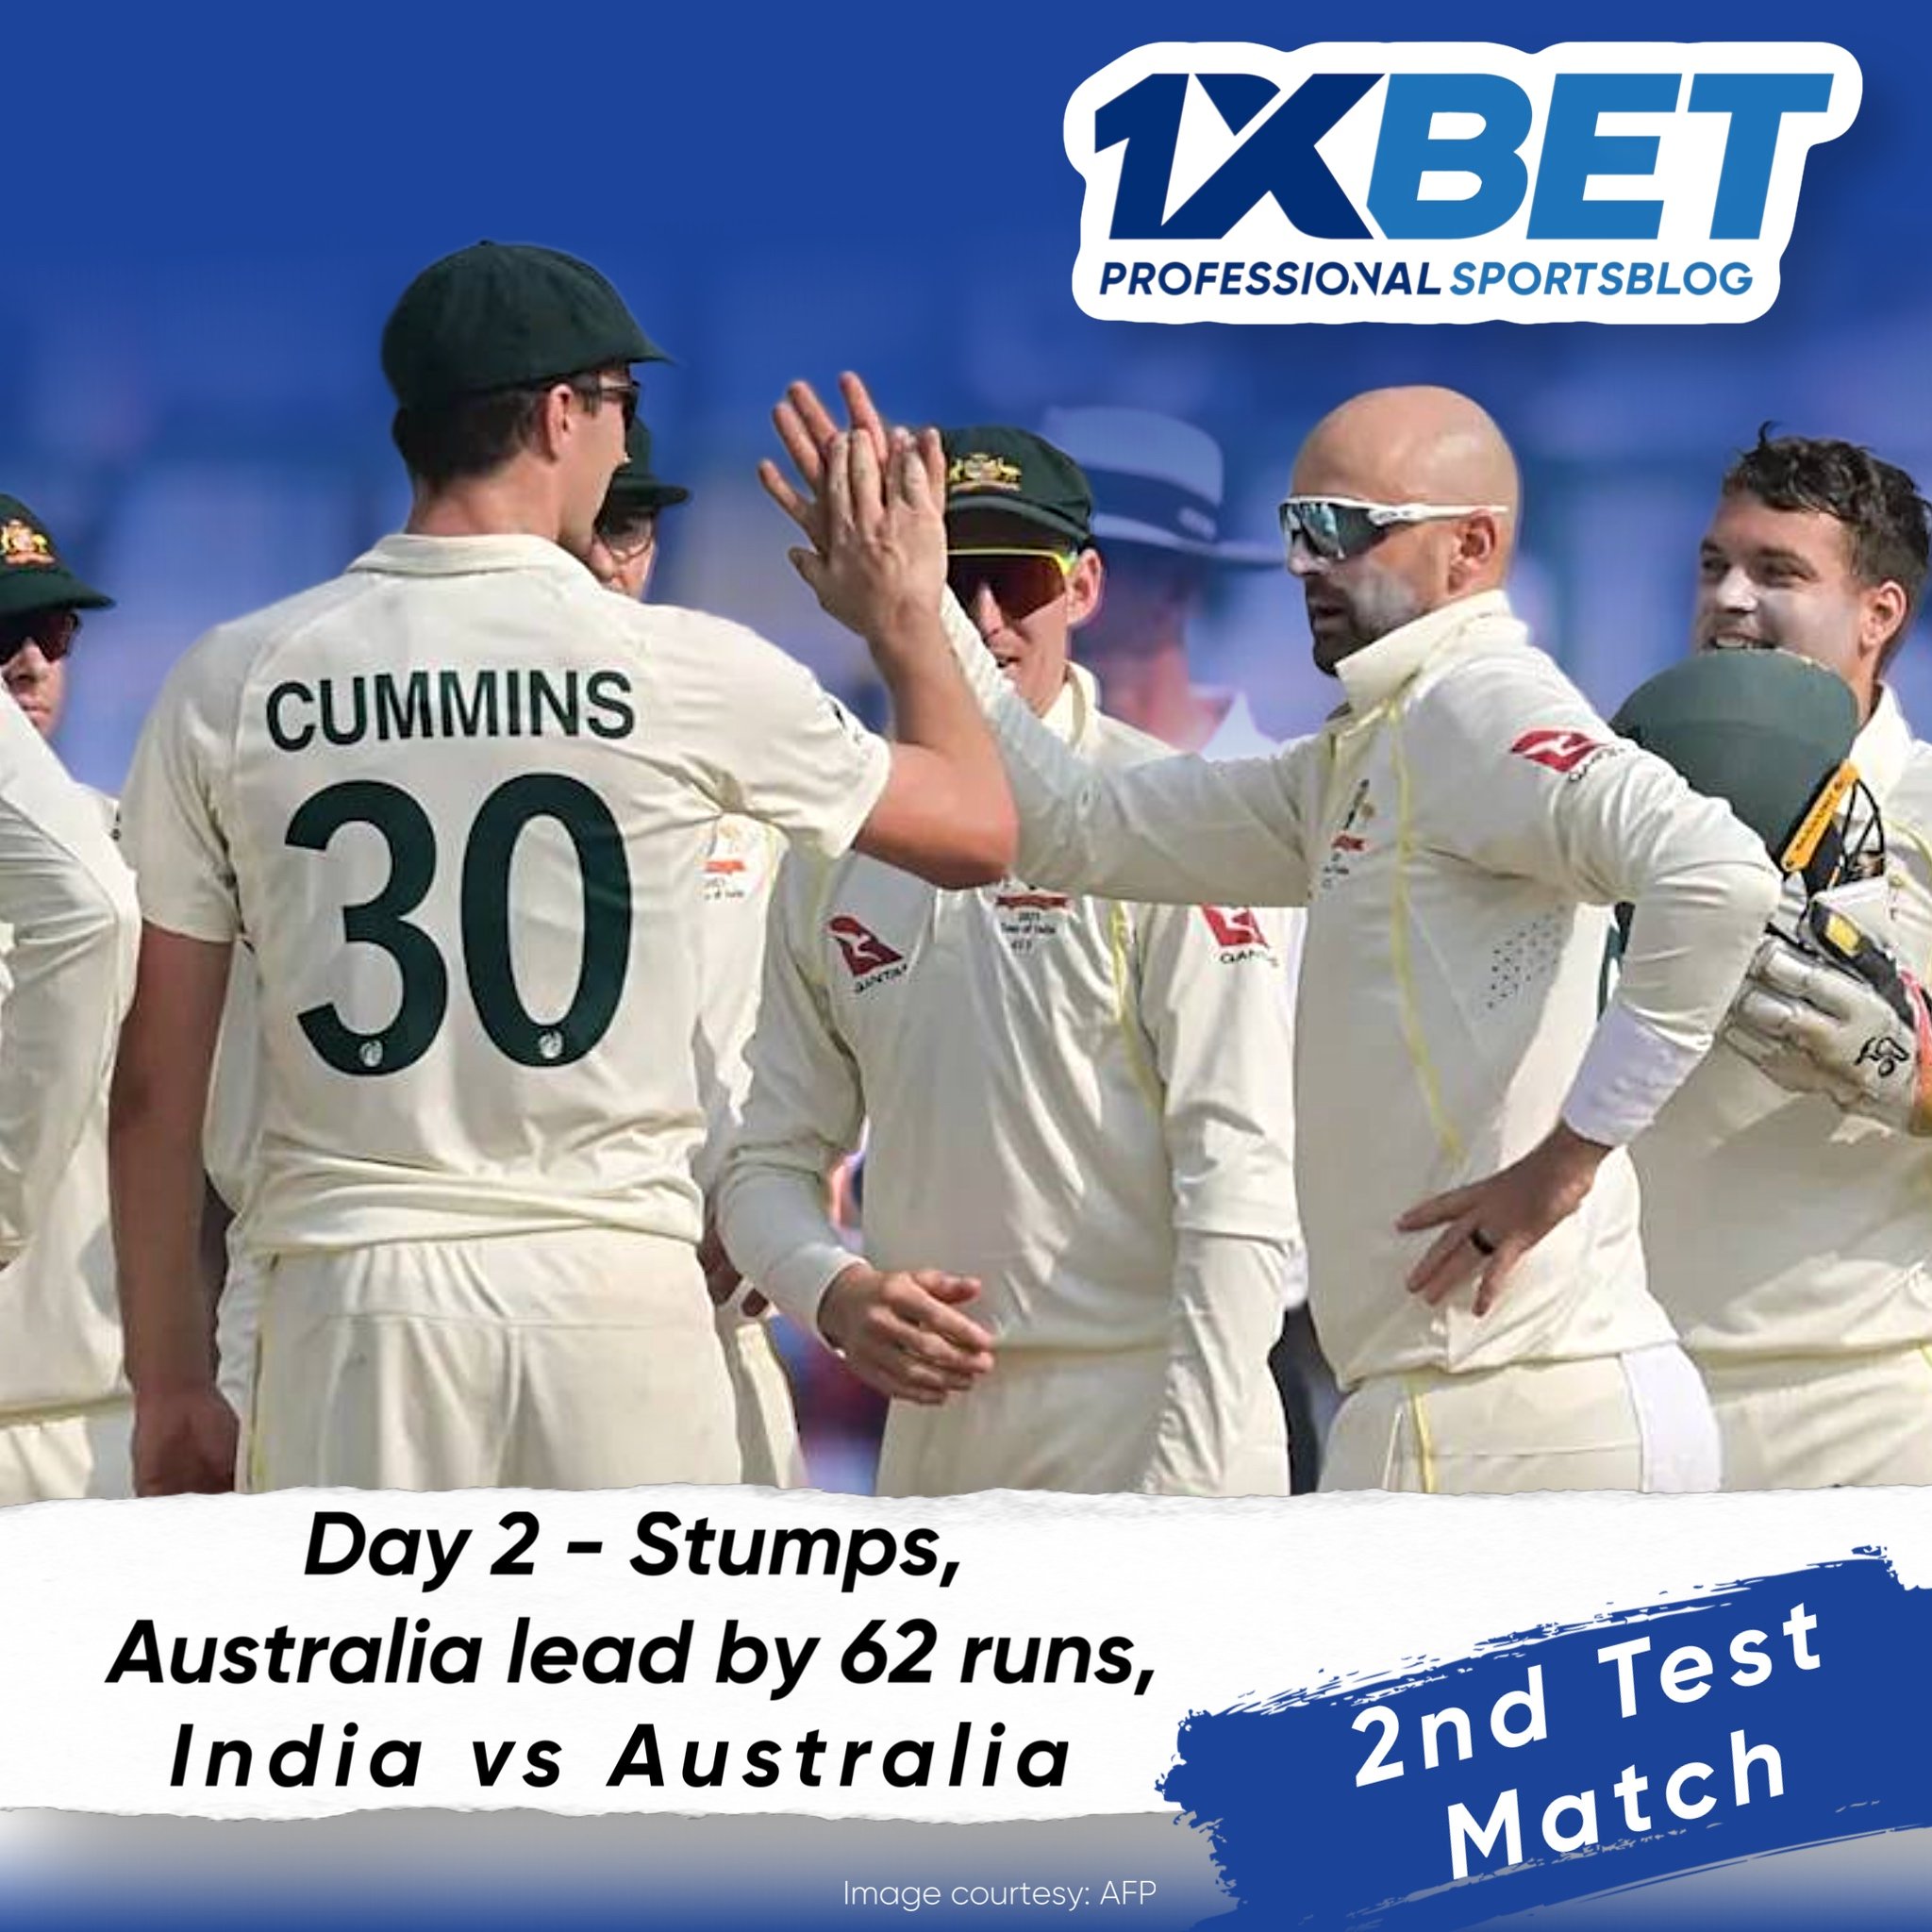 Day 2 - Stumps, Australia lead by 62 runs